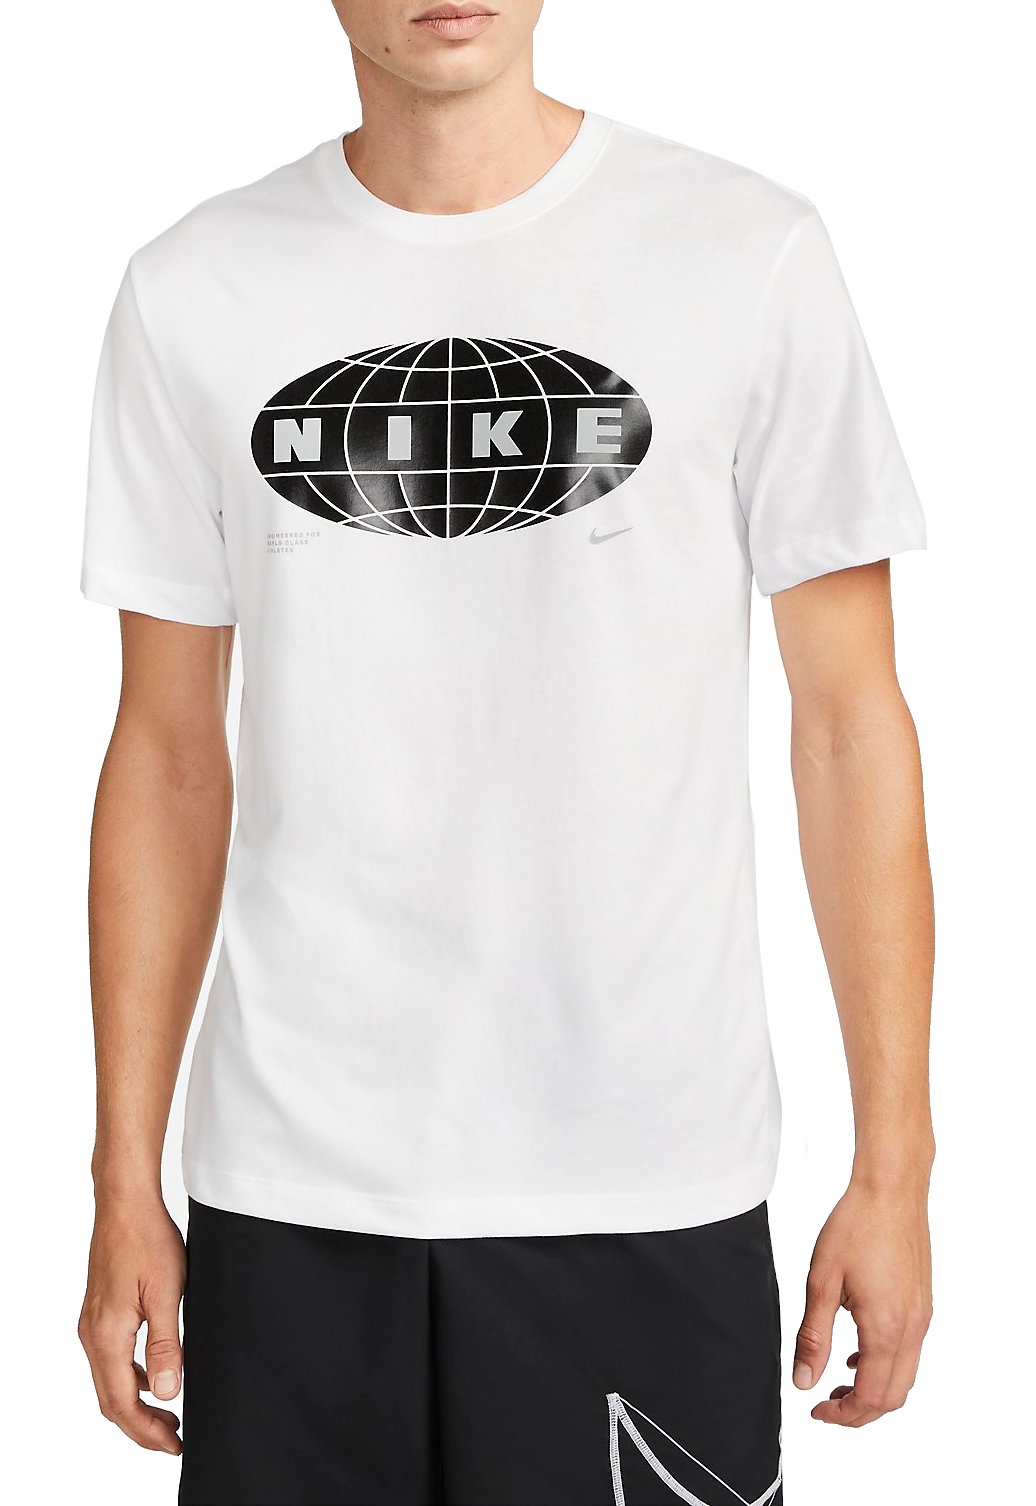 Tee-shirt Nike Dri-FIT Men s Graphic Fitness T-Shirt